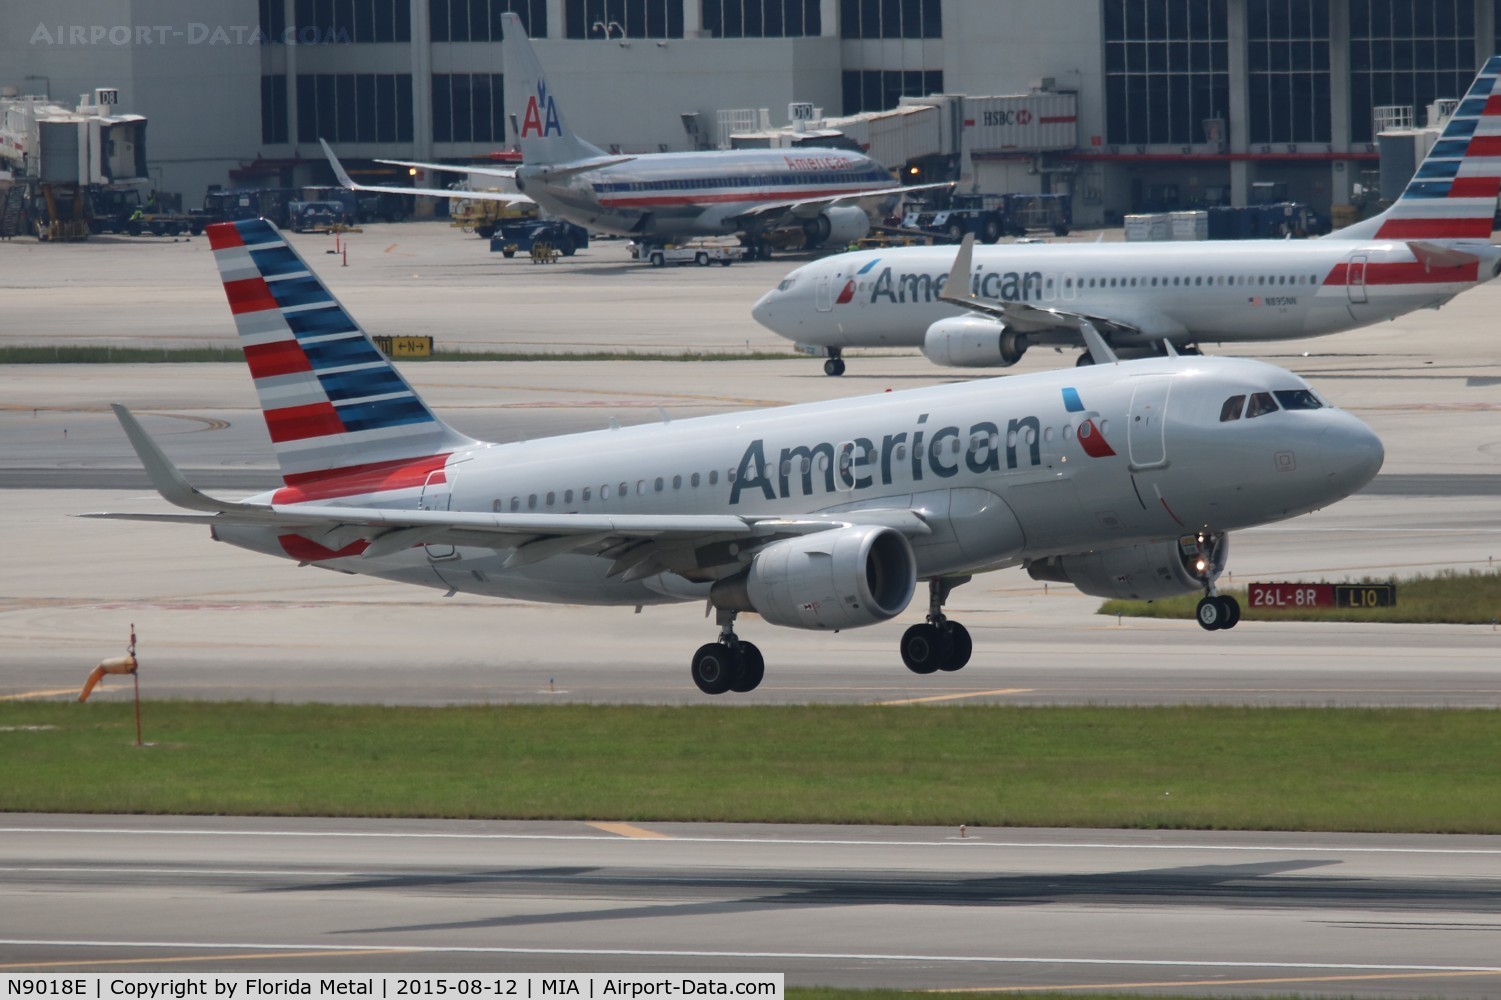 N9018E, 2014 Airbus A319-112 C/N 6150, American